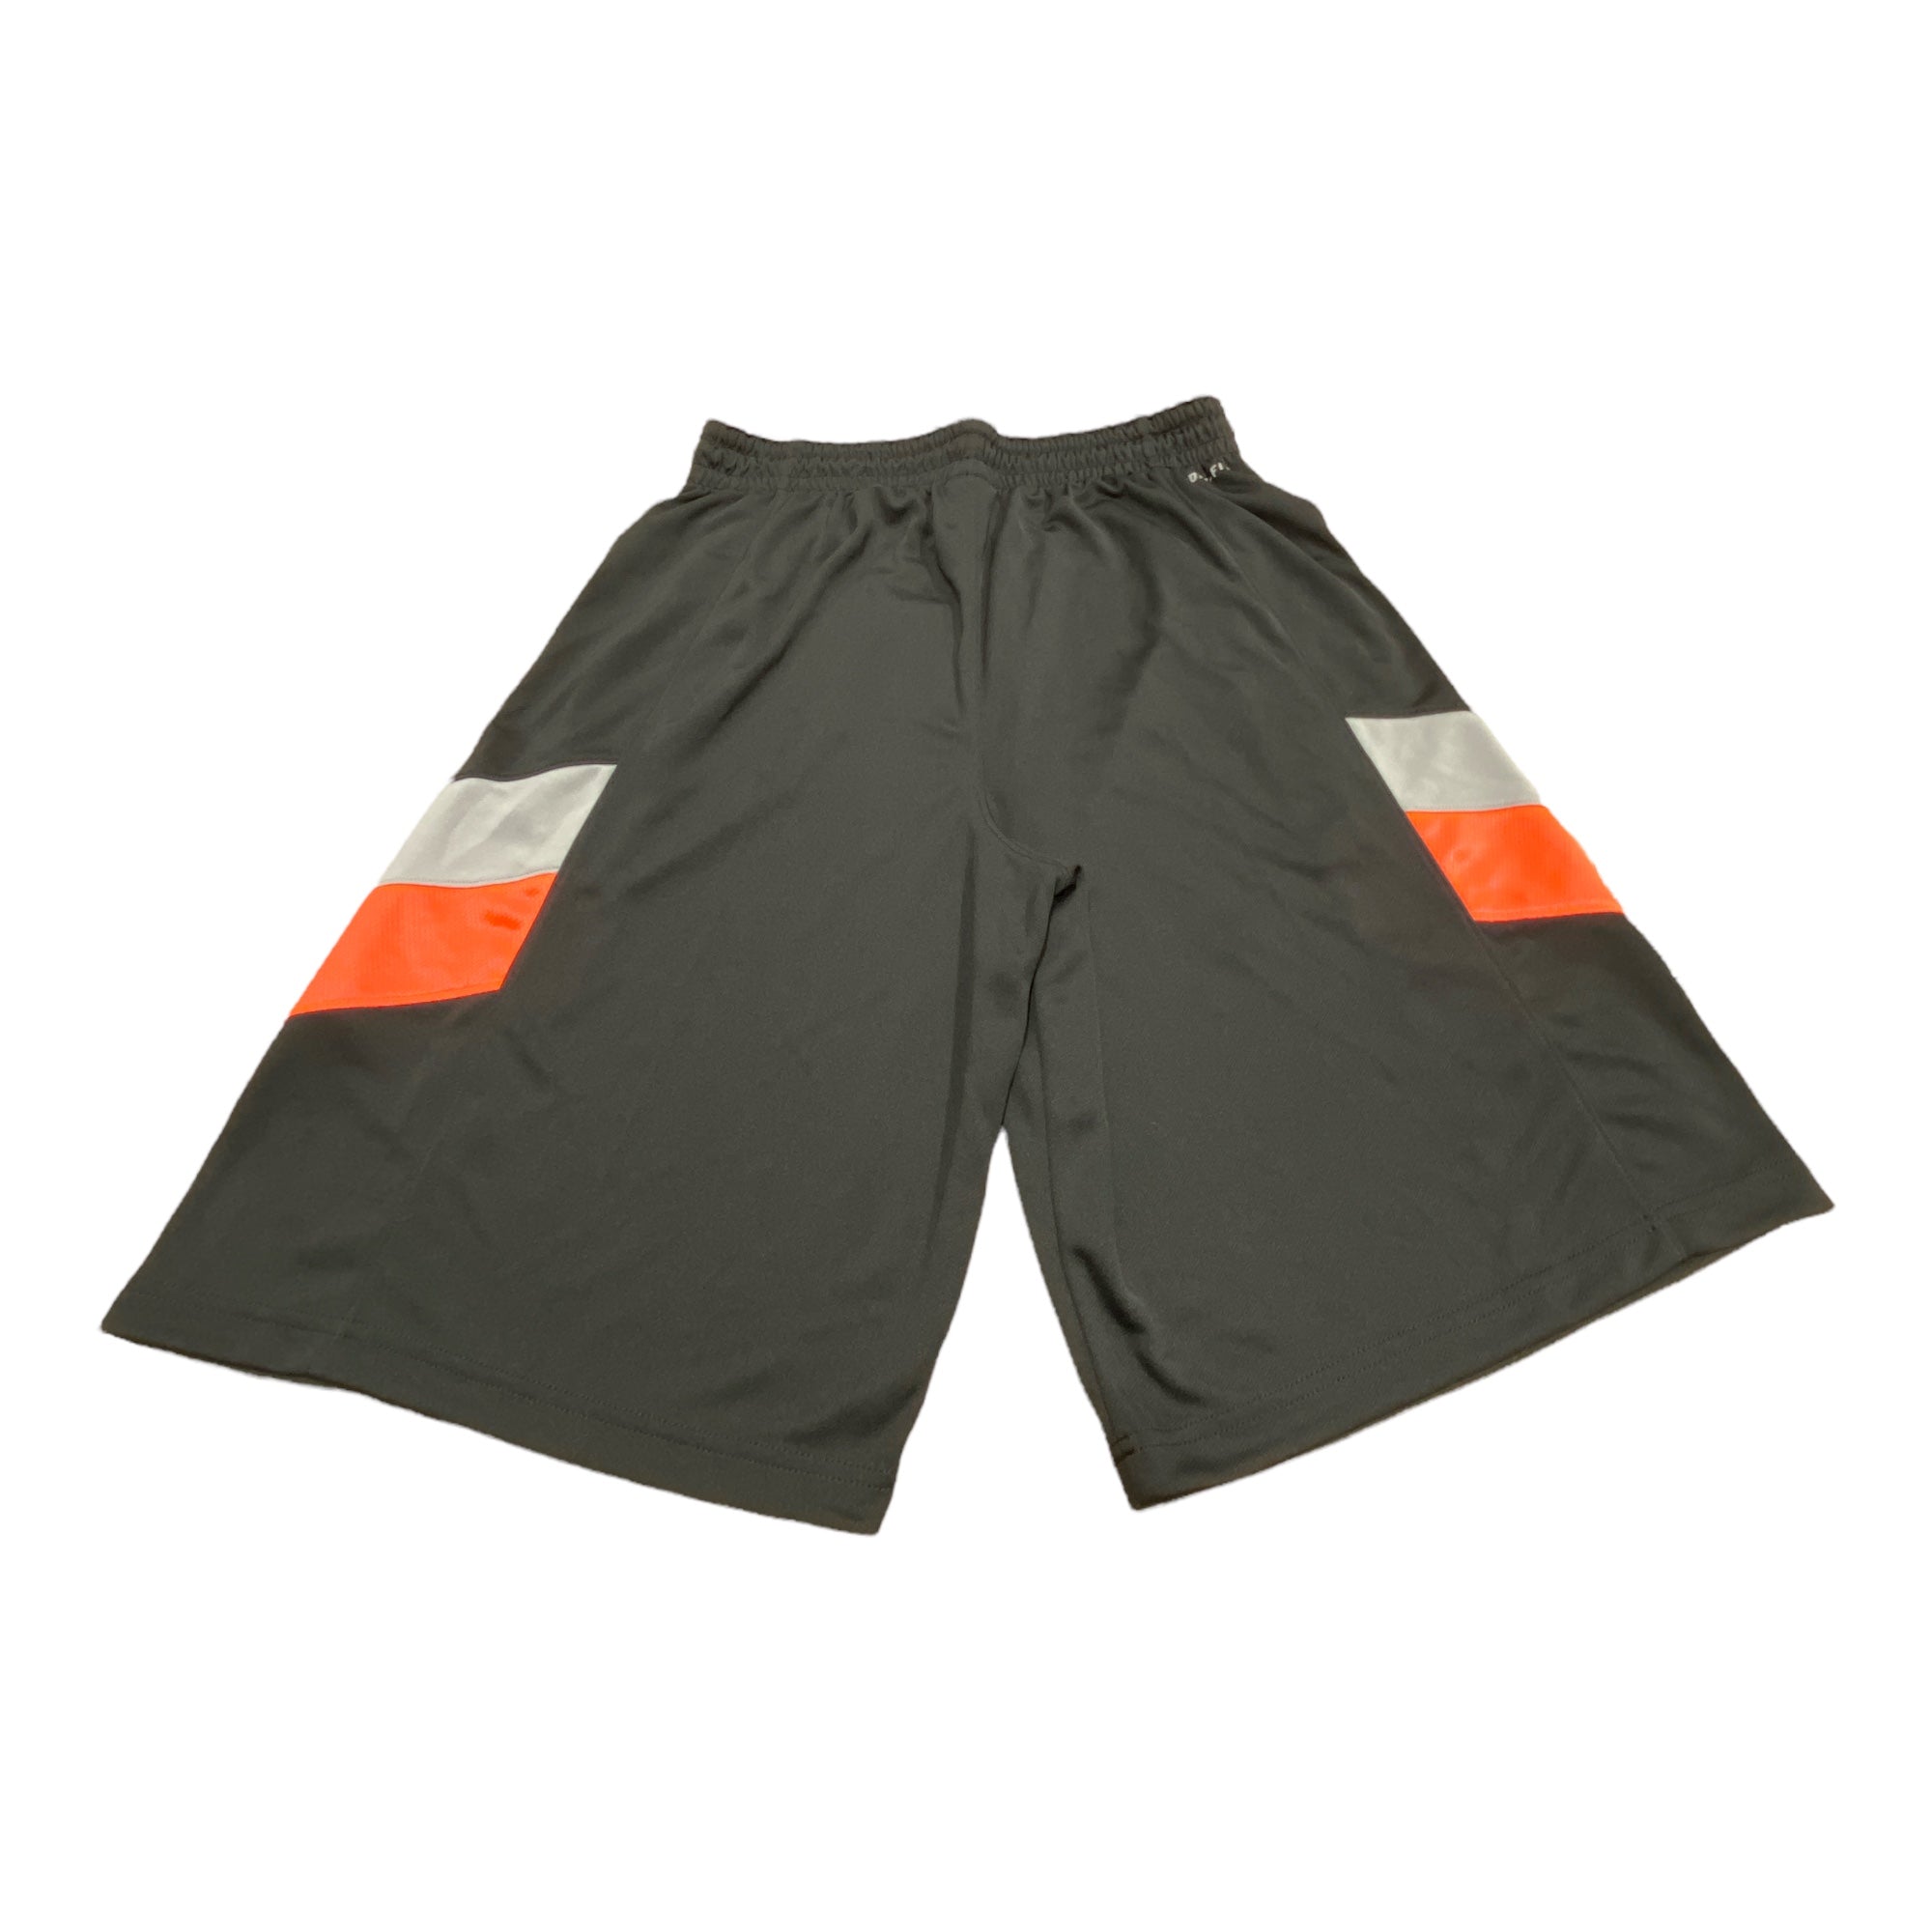 Nike Mens Lebron James Shorts,Black Grey Orange,Medium